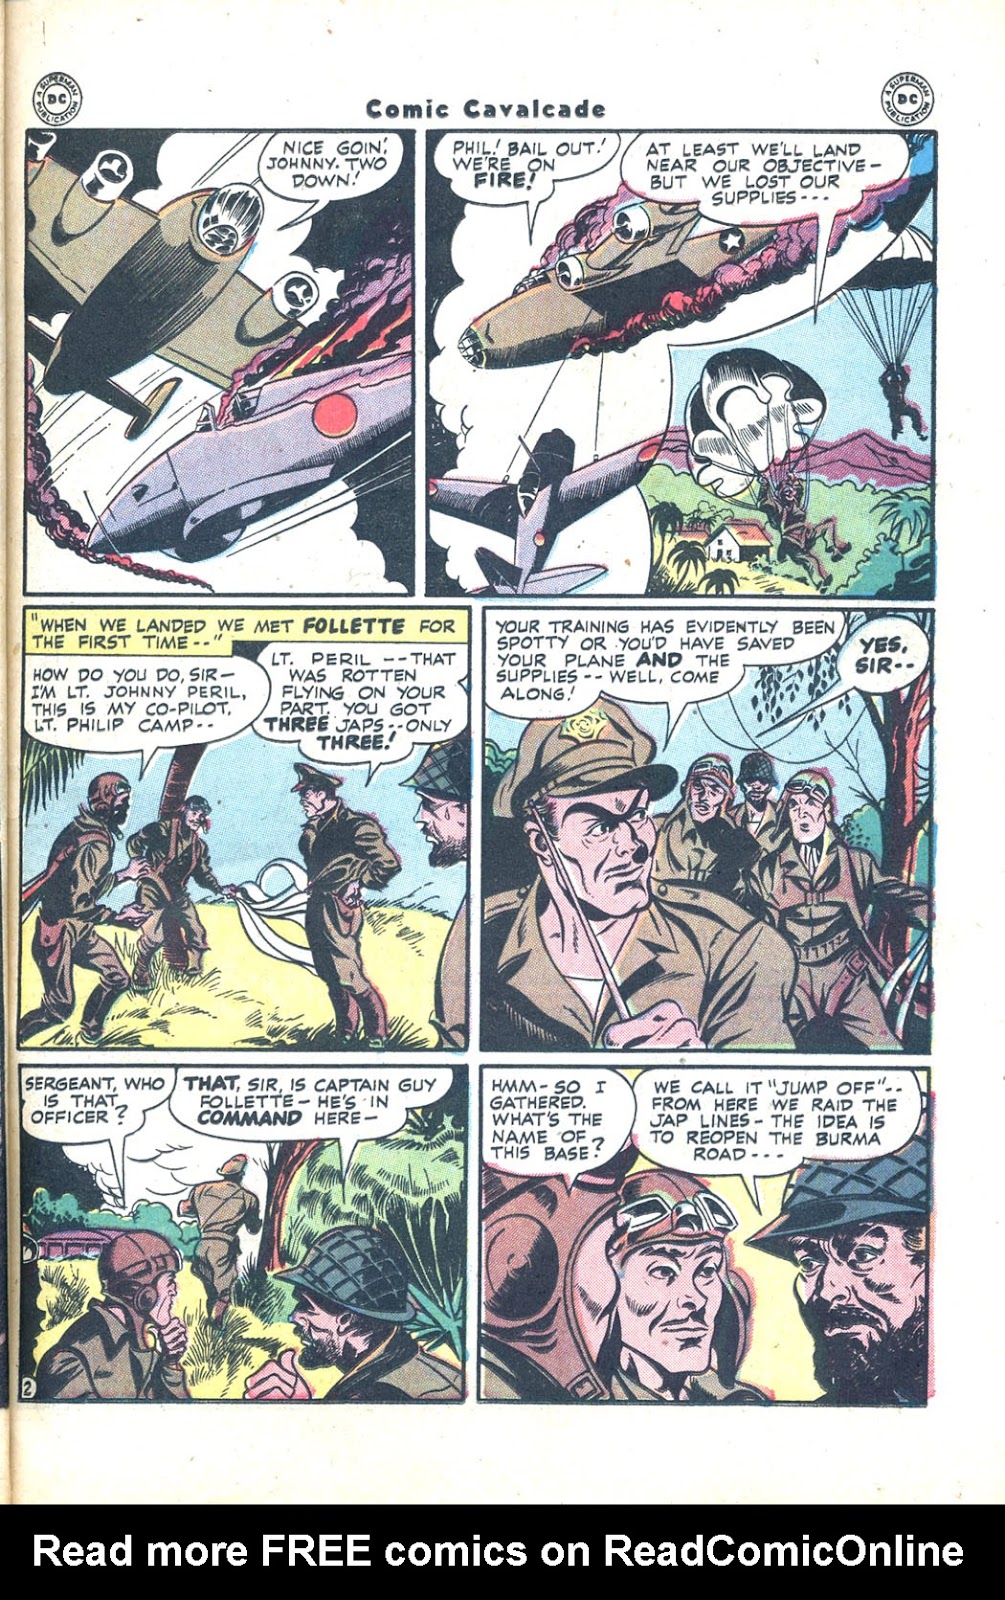 Comic Cavalcade issue 23 - Page 23